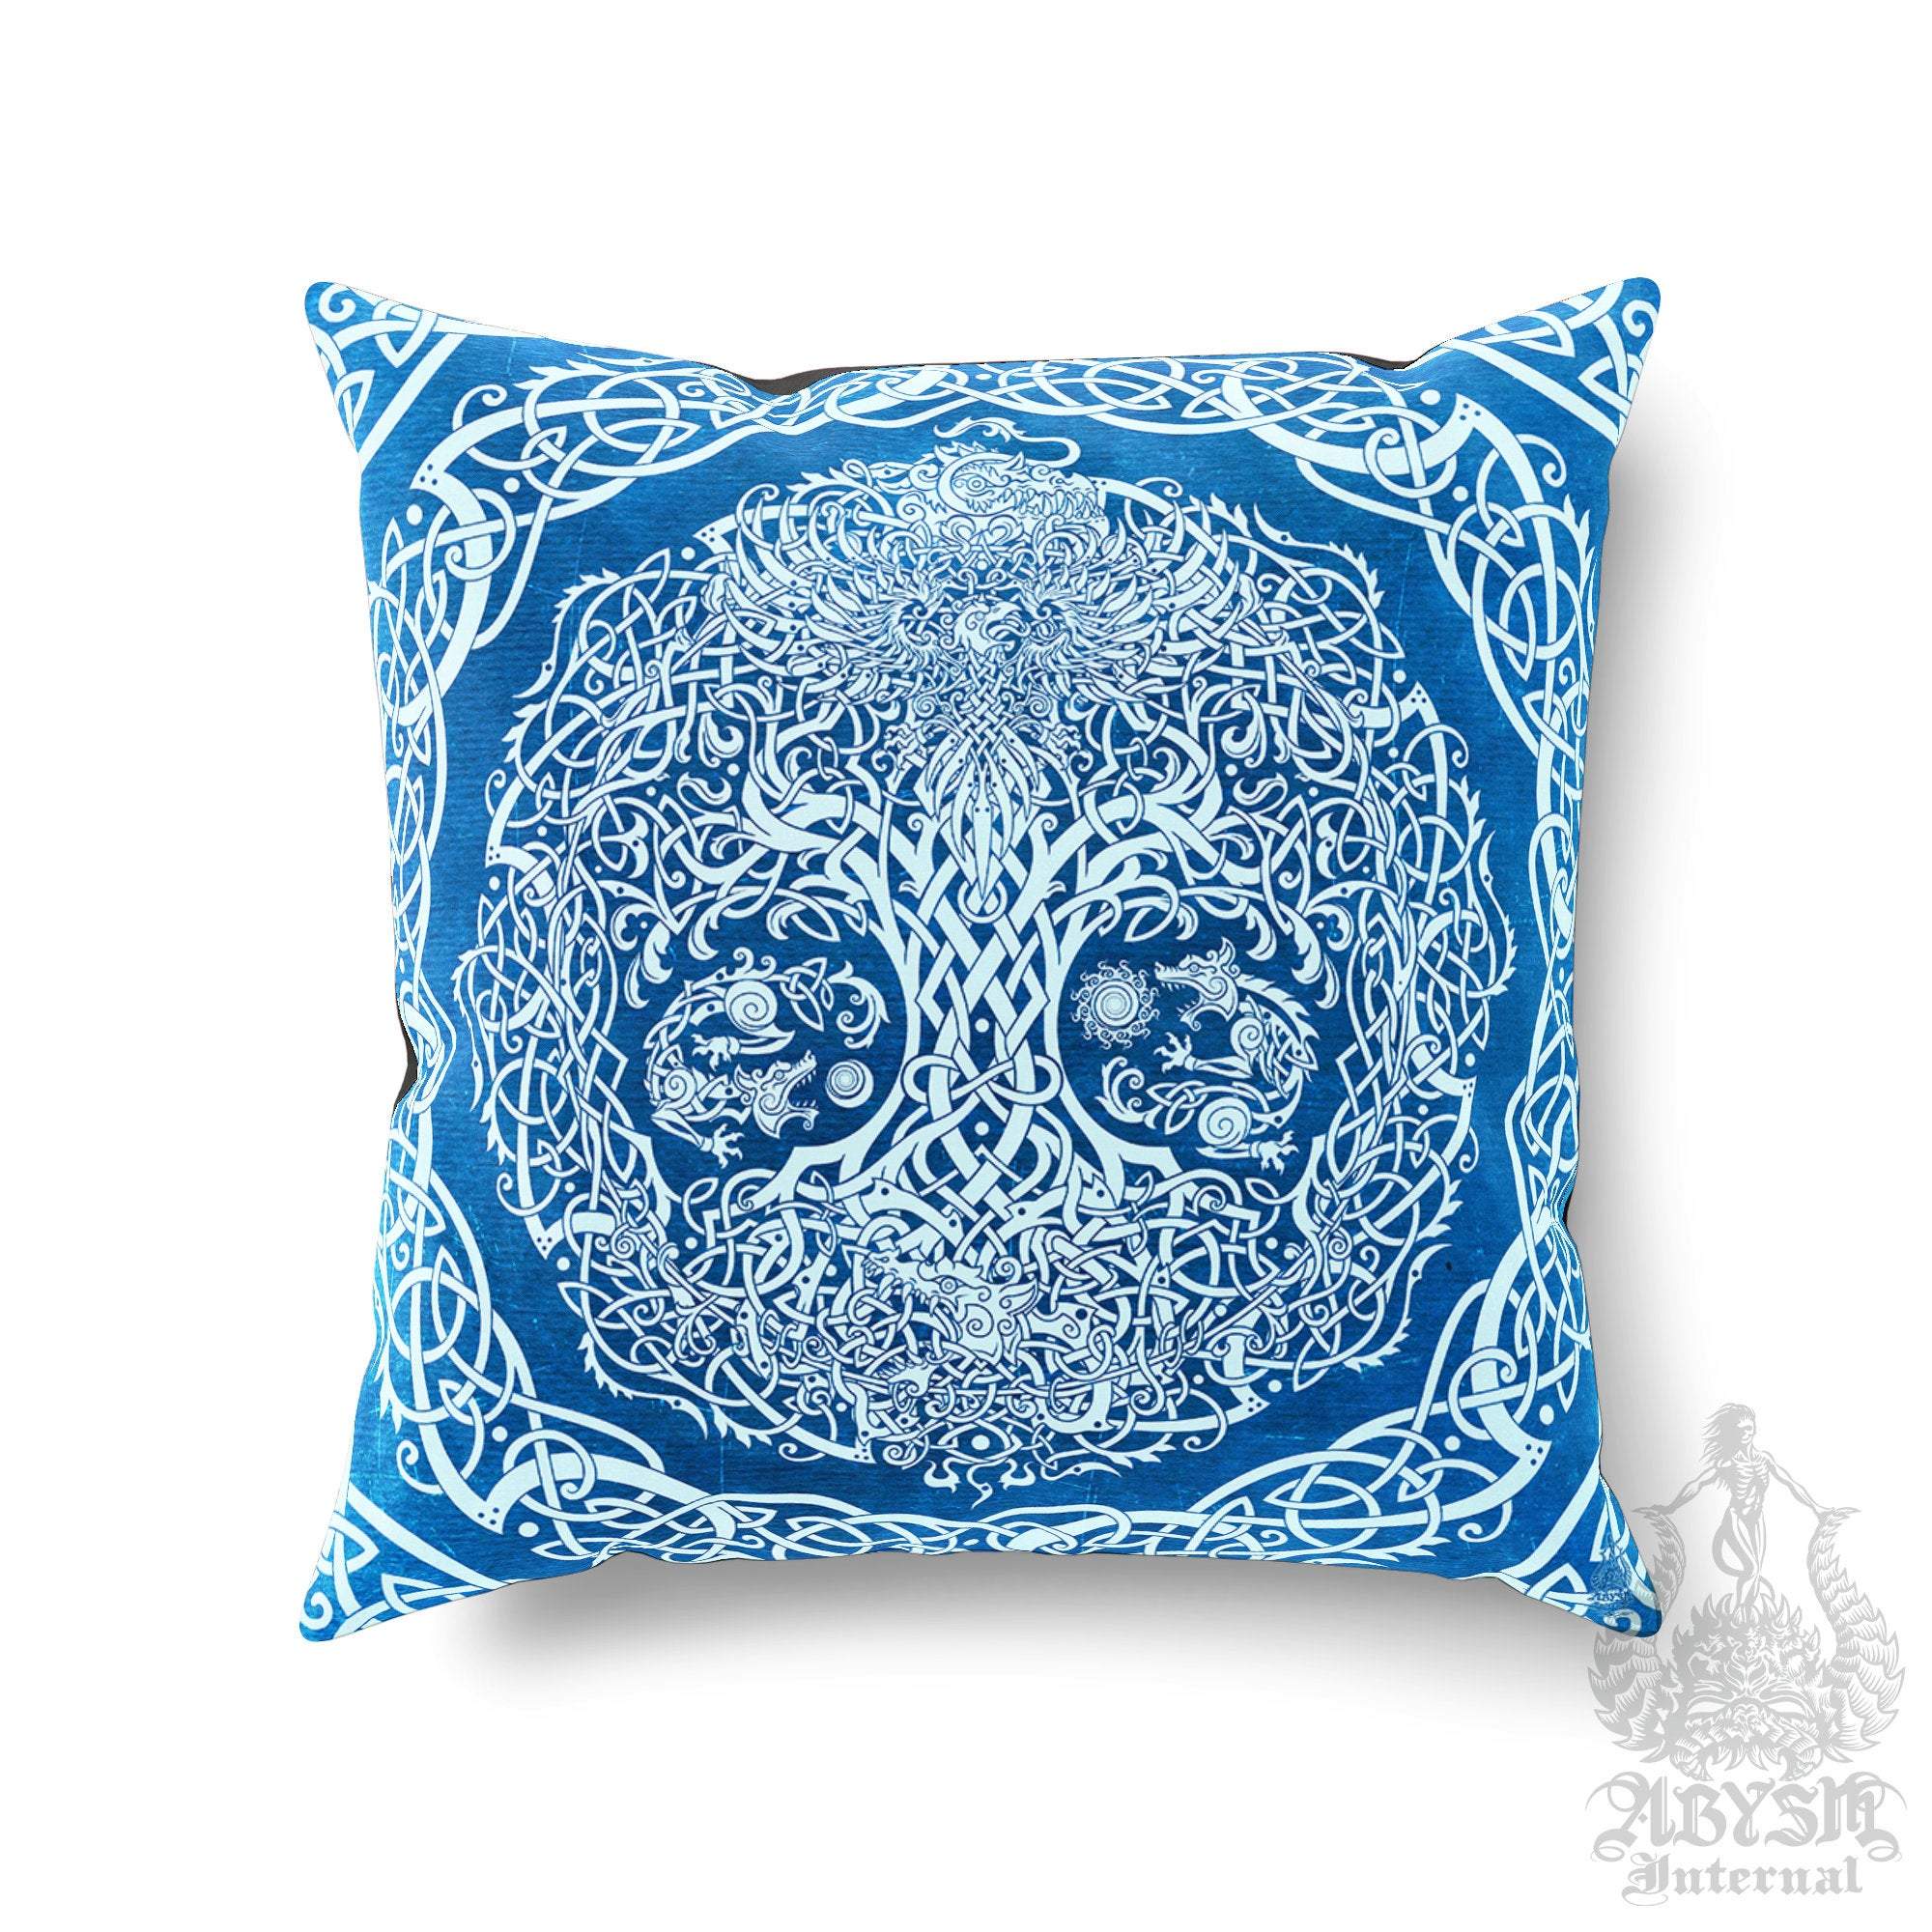 Viking Throw Pillow, Decorative Accent Cushion, Yggdrasil, Norse Decor, Nordic Art, Alternative Home - Tree of Life, Blue - Abysm Internal